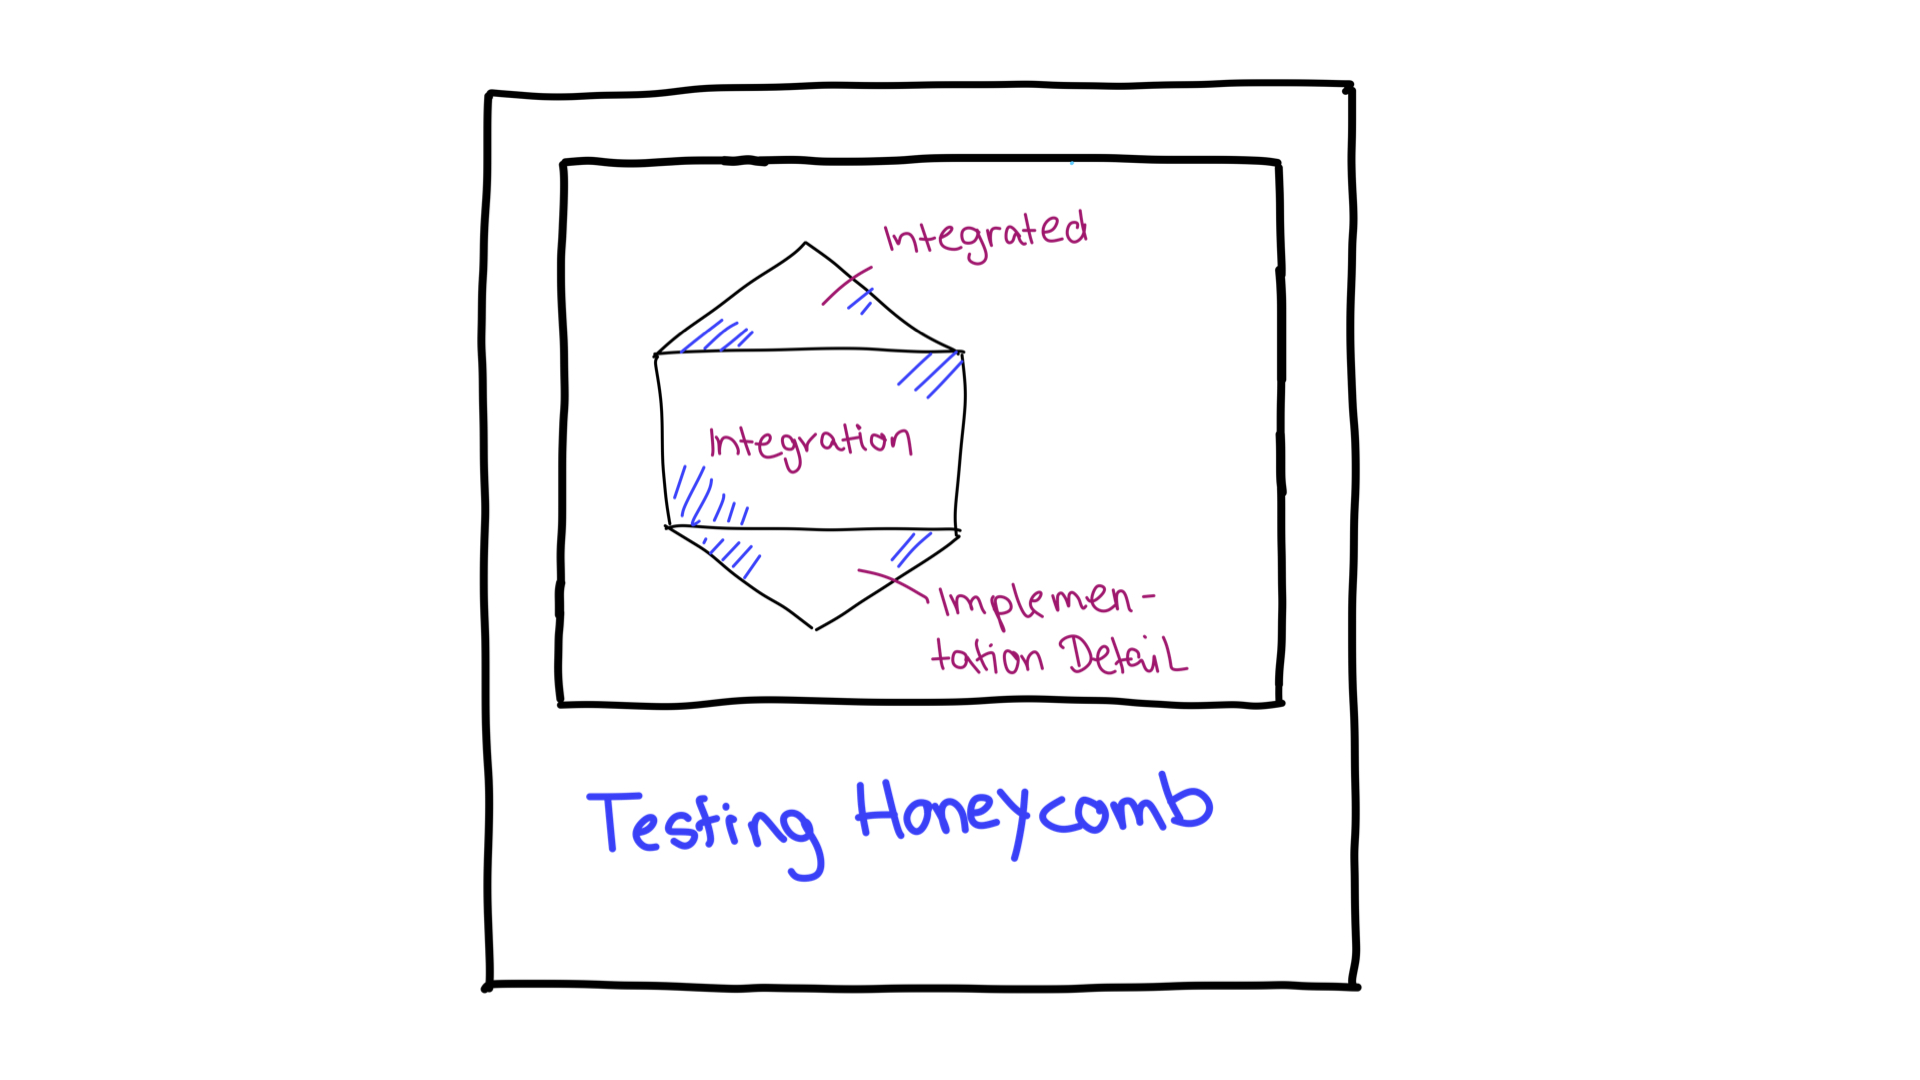 The testing honeycomb.